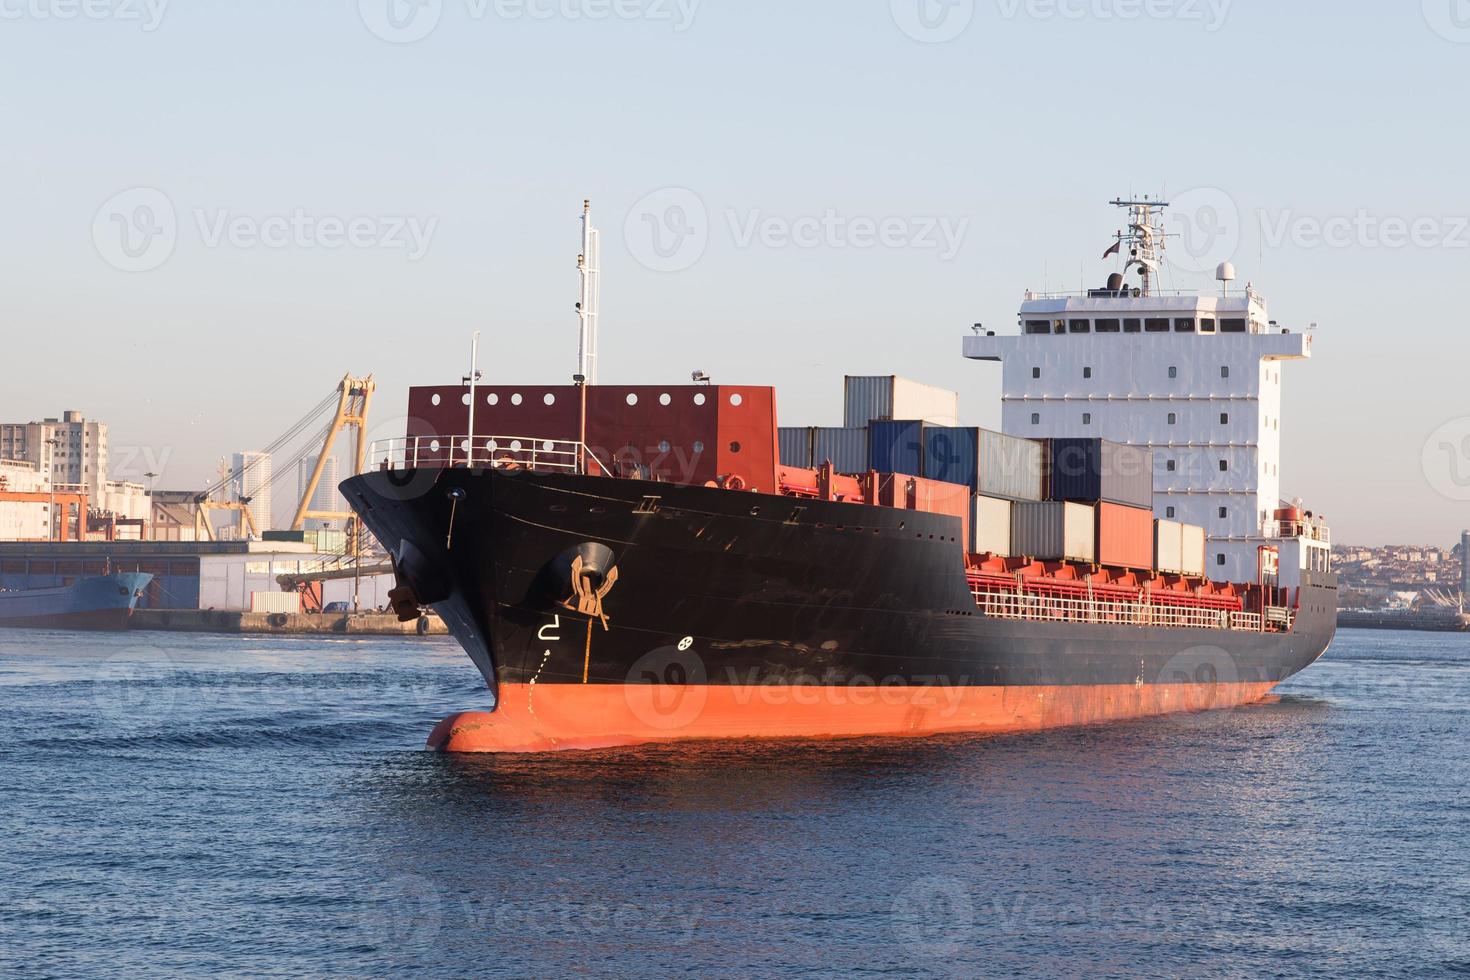 Container Ship in sea photo